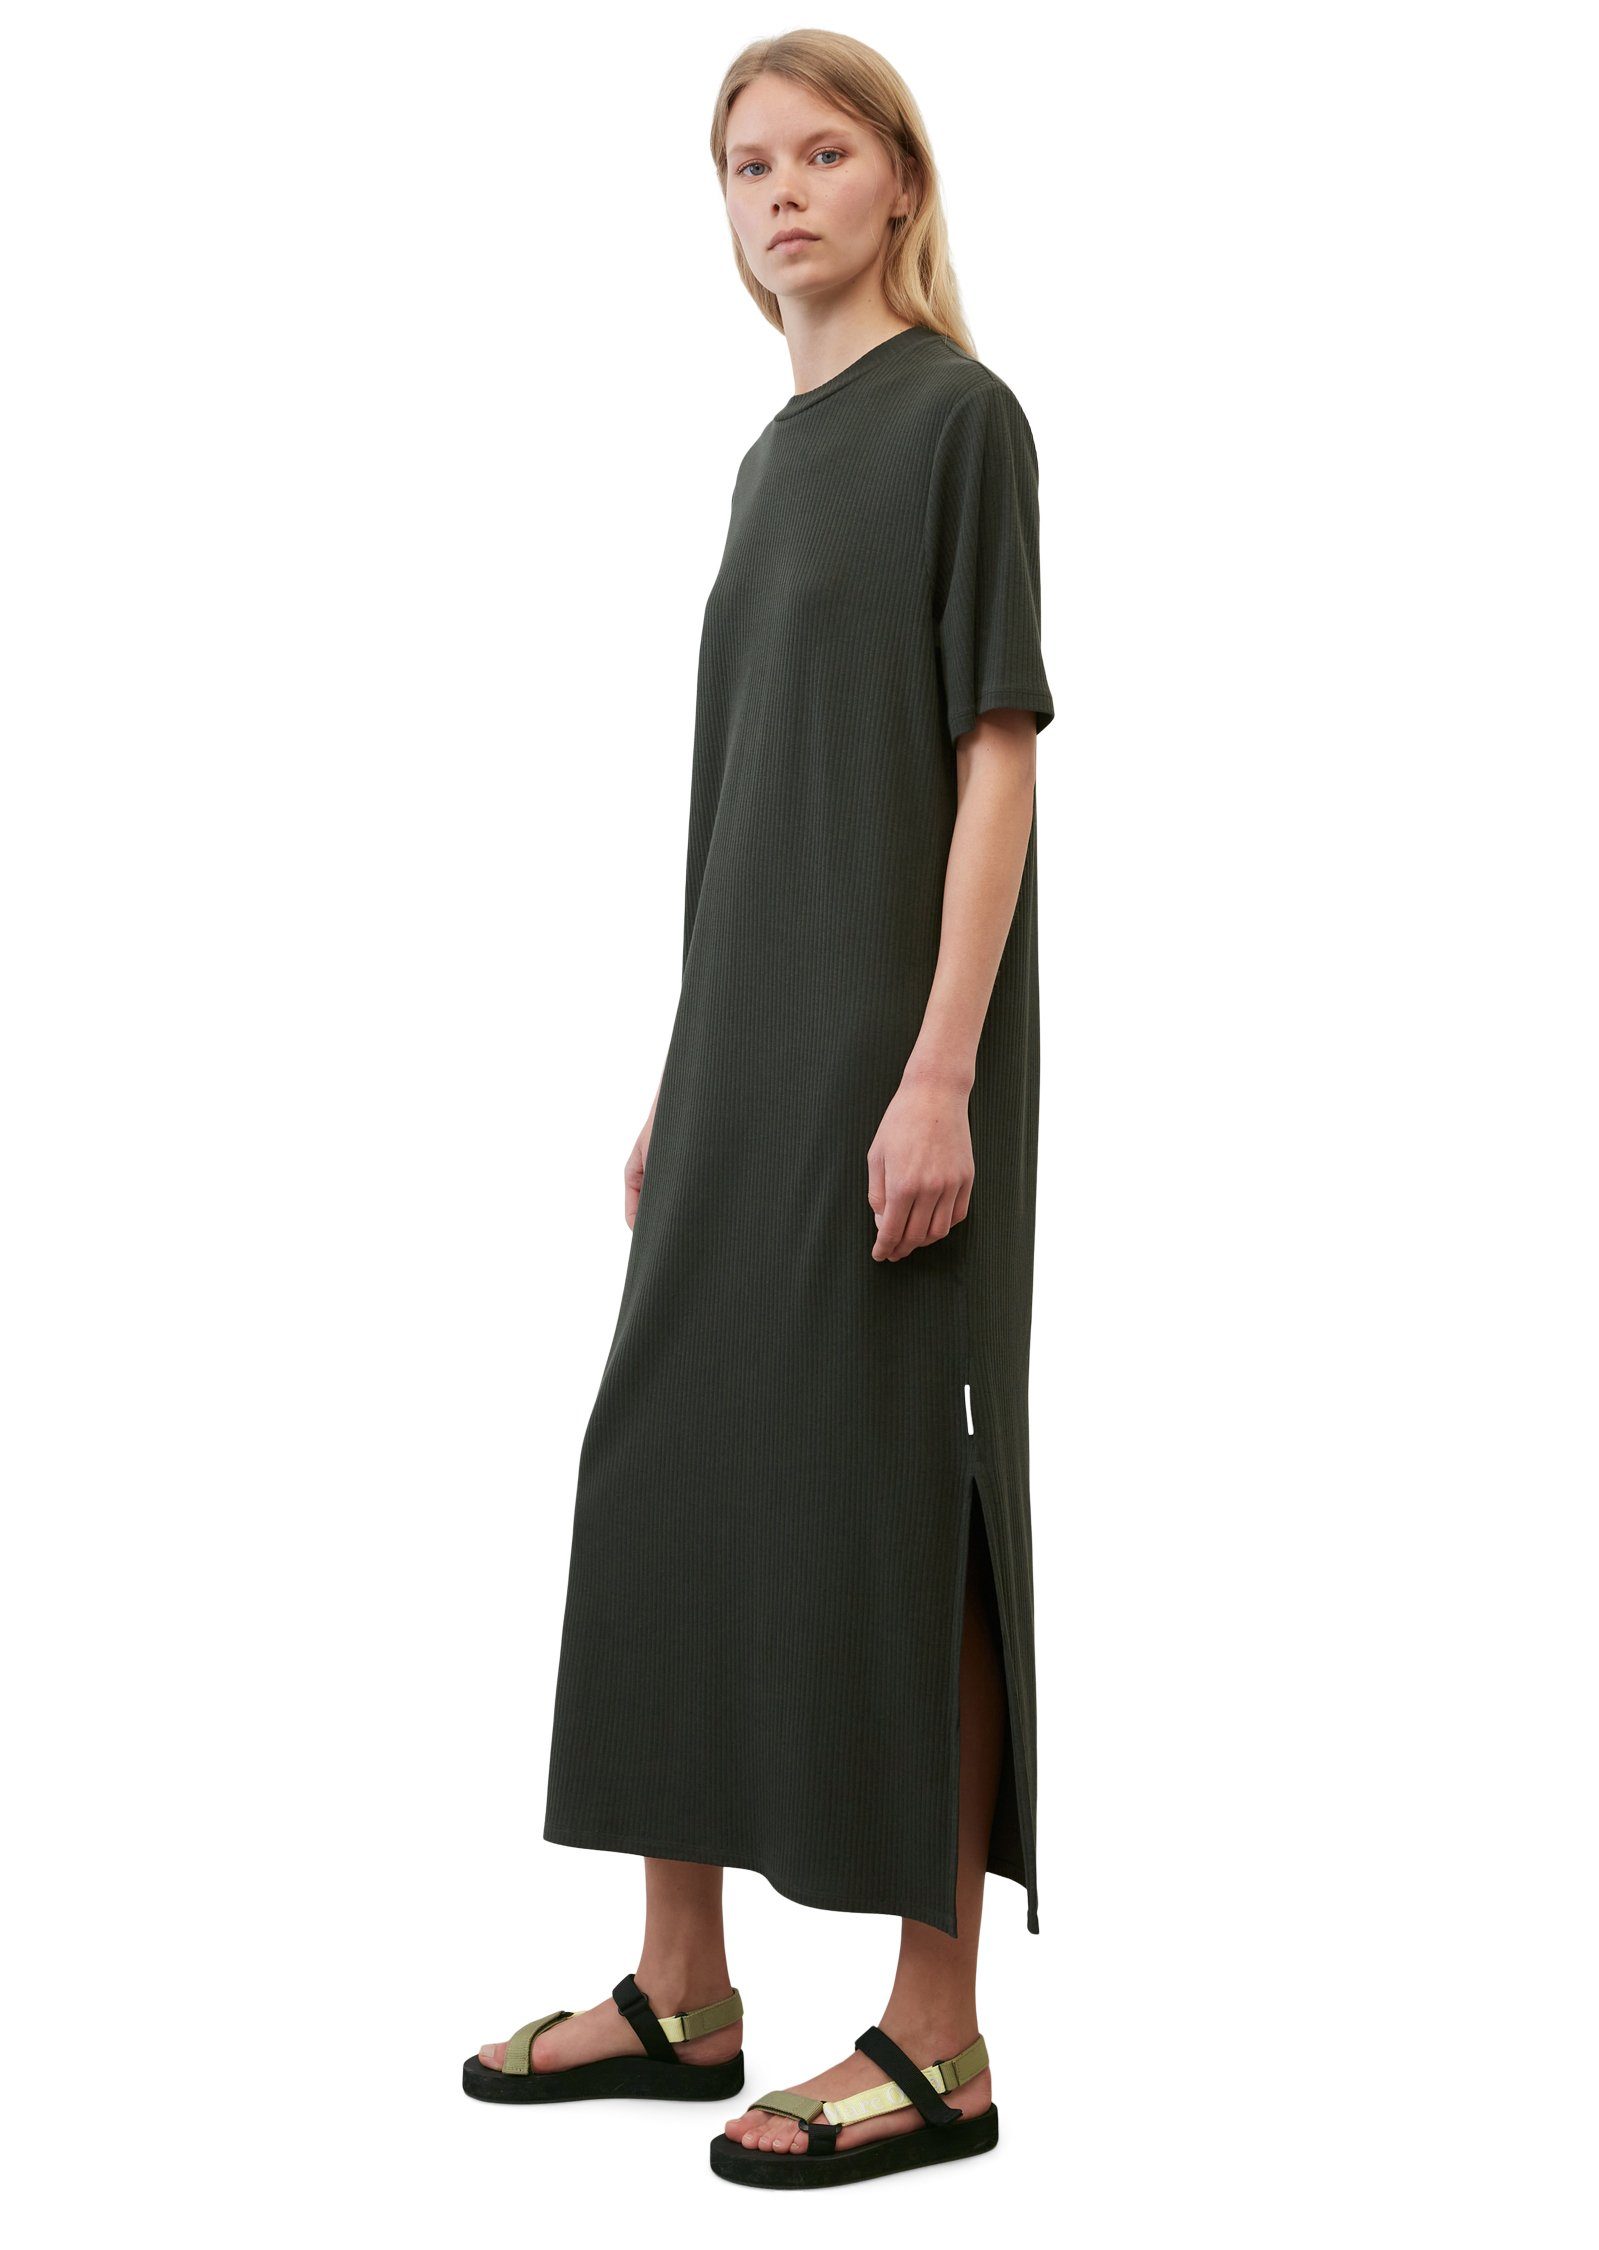 Damen Kleider Marc O'Polo DENIM Jerseykleid aus softem, stretchigem Baumwolle-Lyocell-Mix